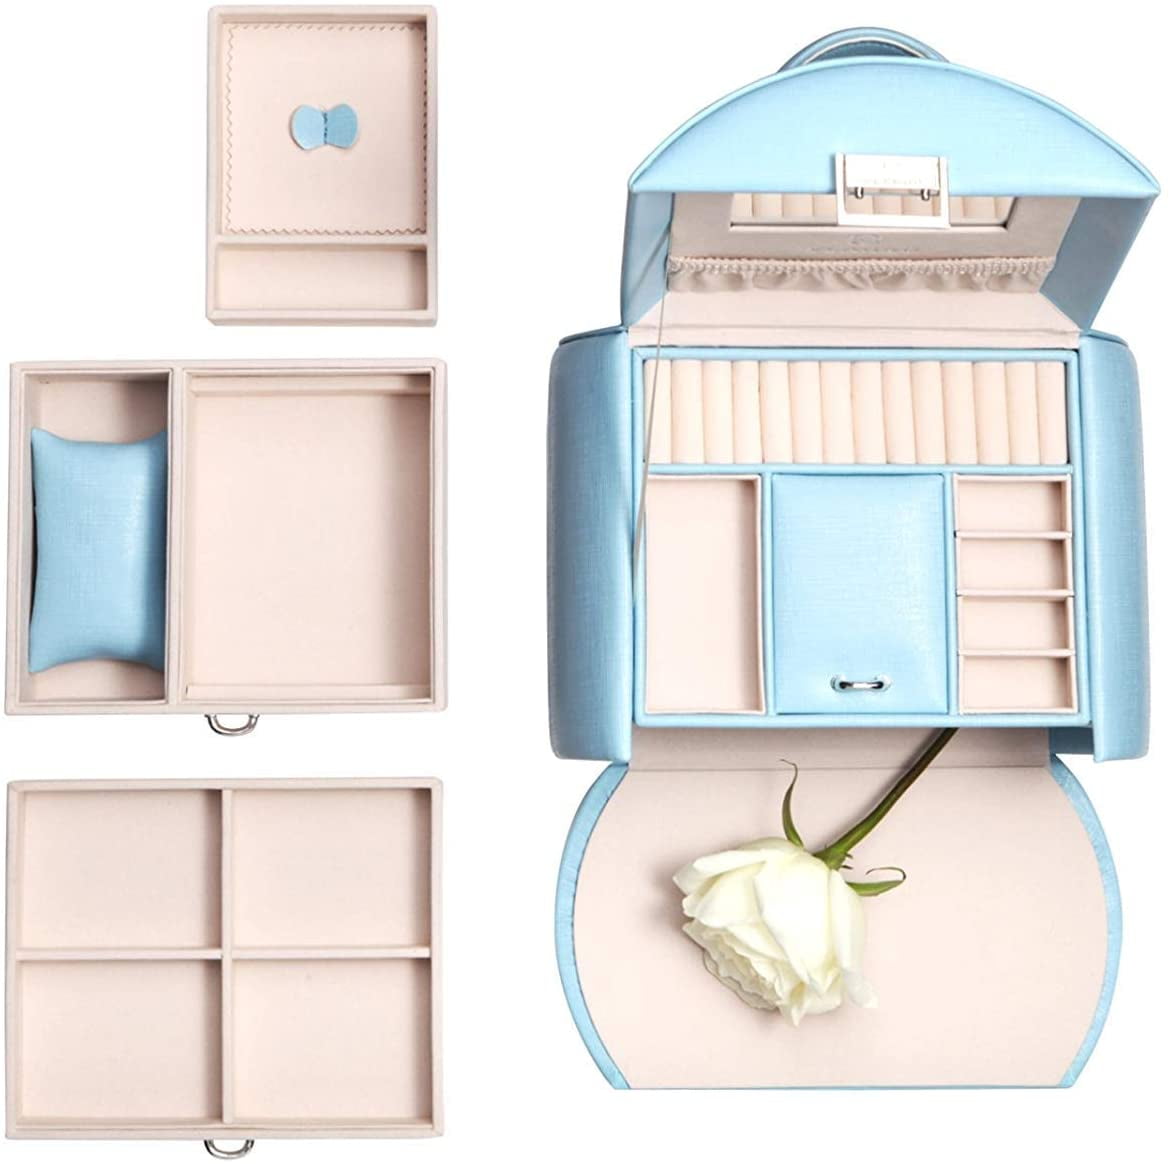 Vlando Princess Style Jewelry Box from Netherlands Design Team Fabulous Girls Gift (Pink)